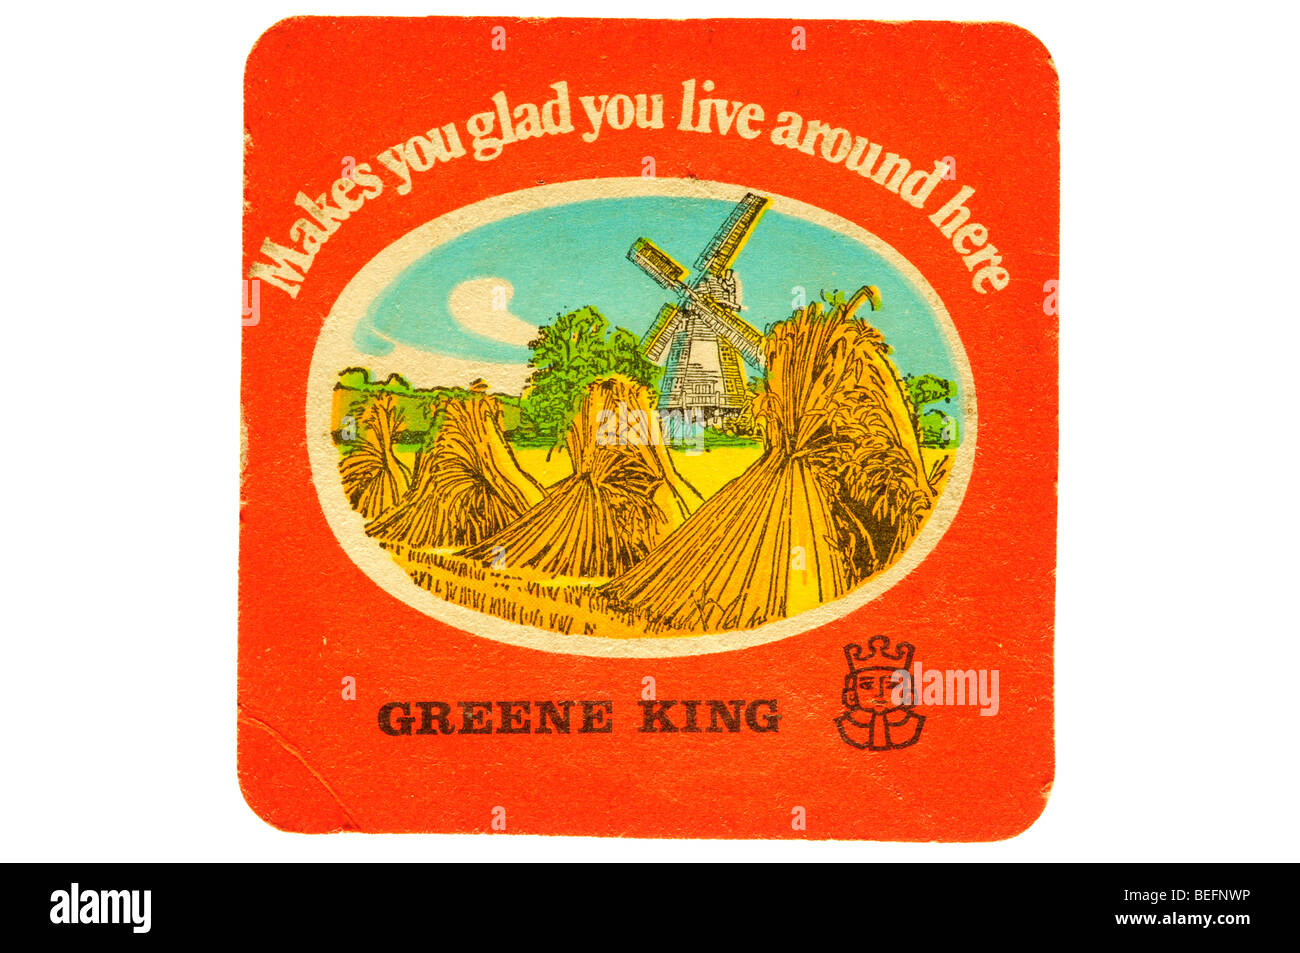 makes you glad you live around hear greene king Stock Photo